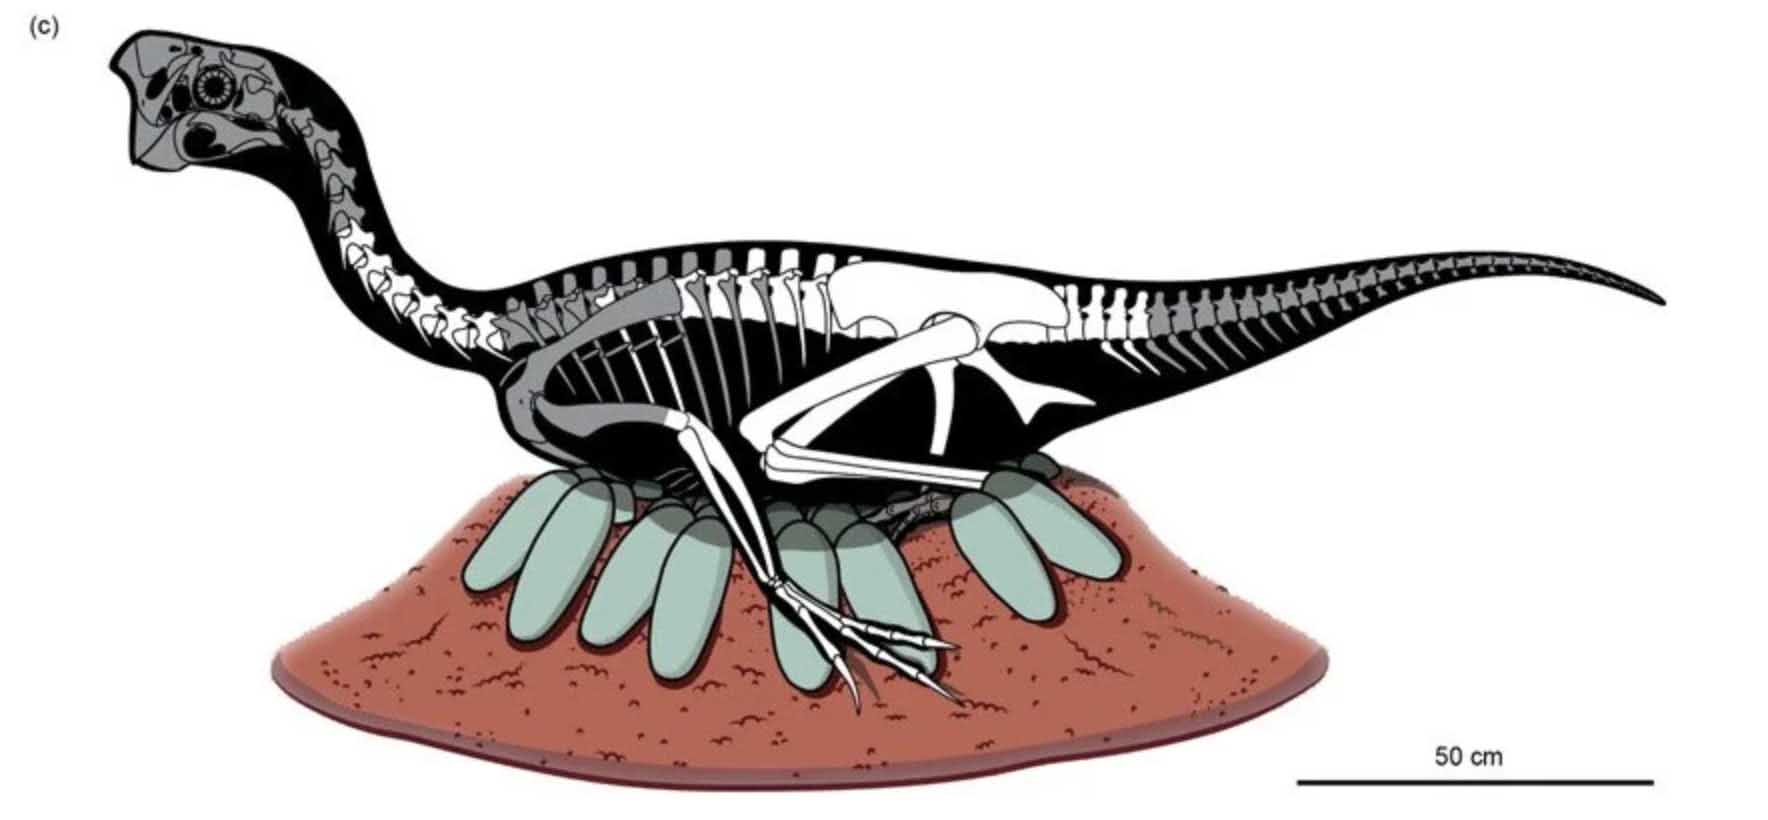 Incredibly preserved dinosaur embryo found inside fossilized egg 7